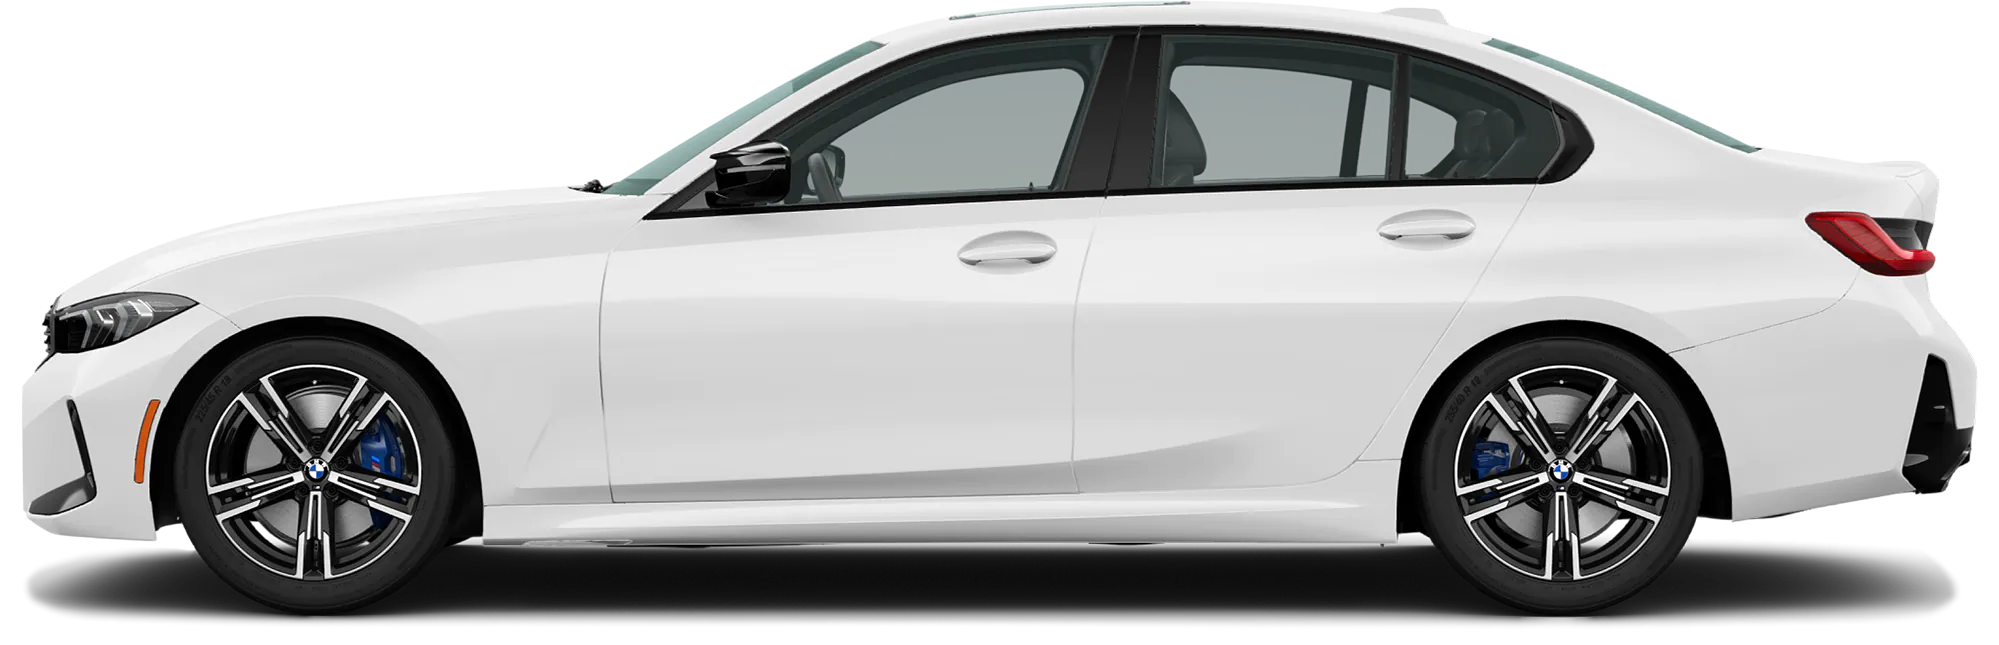 BMW M340i exterior - Side Profile